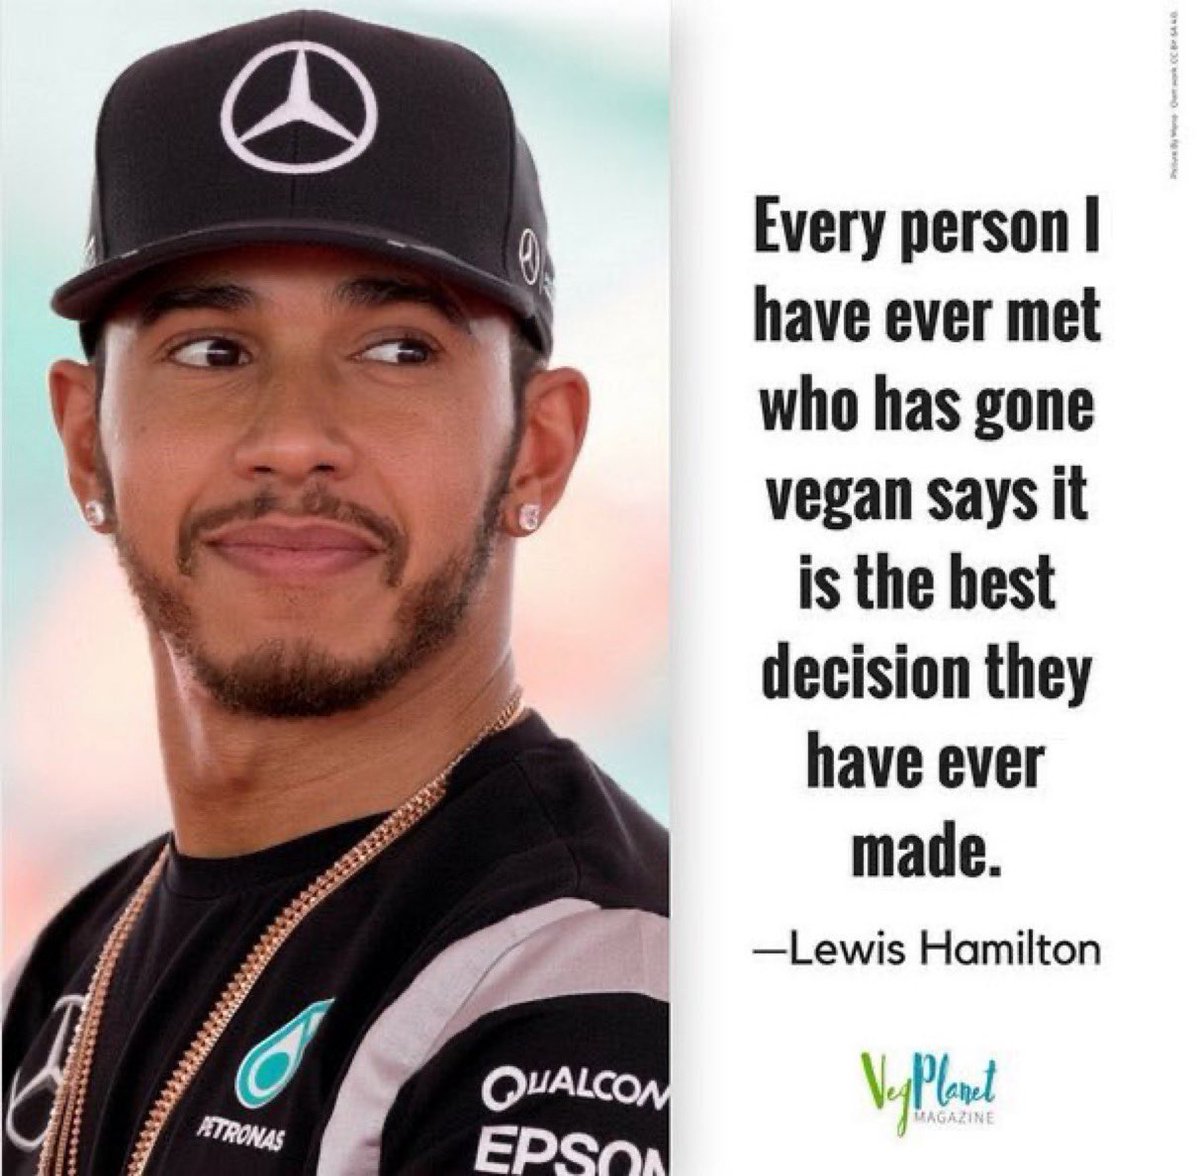 RT @CMaj82: Lewis Hamilton.
Spot on.
#Vegan https://t.co/t3Ff9593Oj